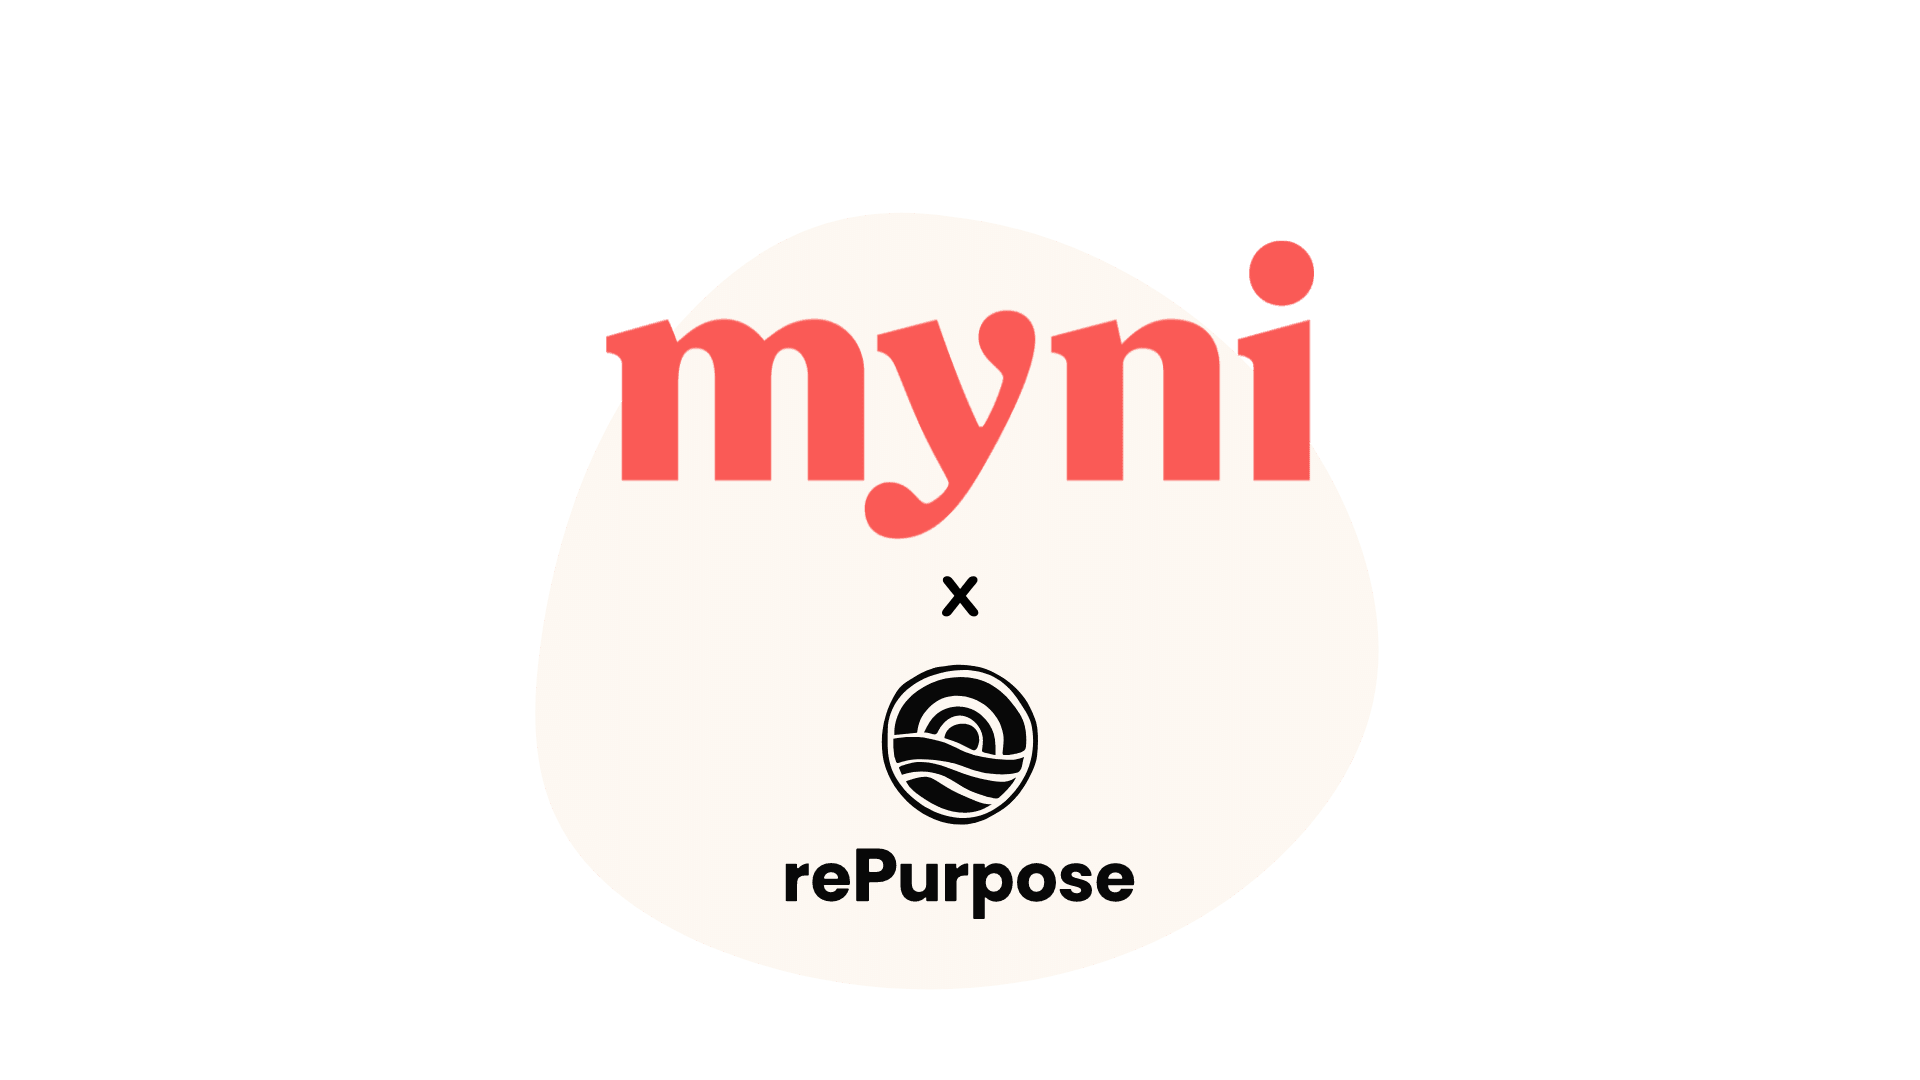 MYNI is now certified Plastic Neutral! - MYNI